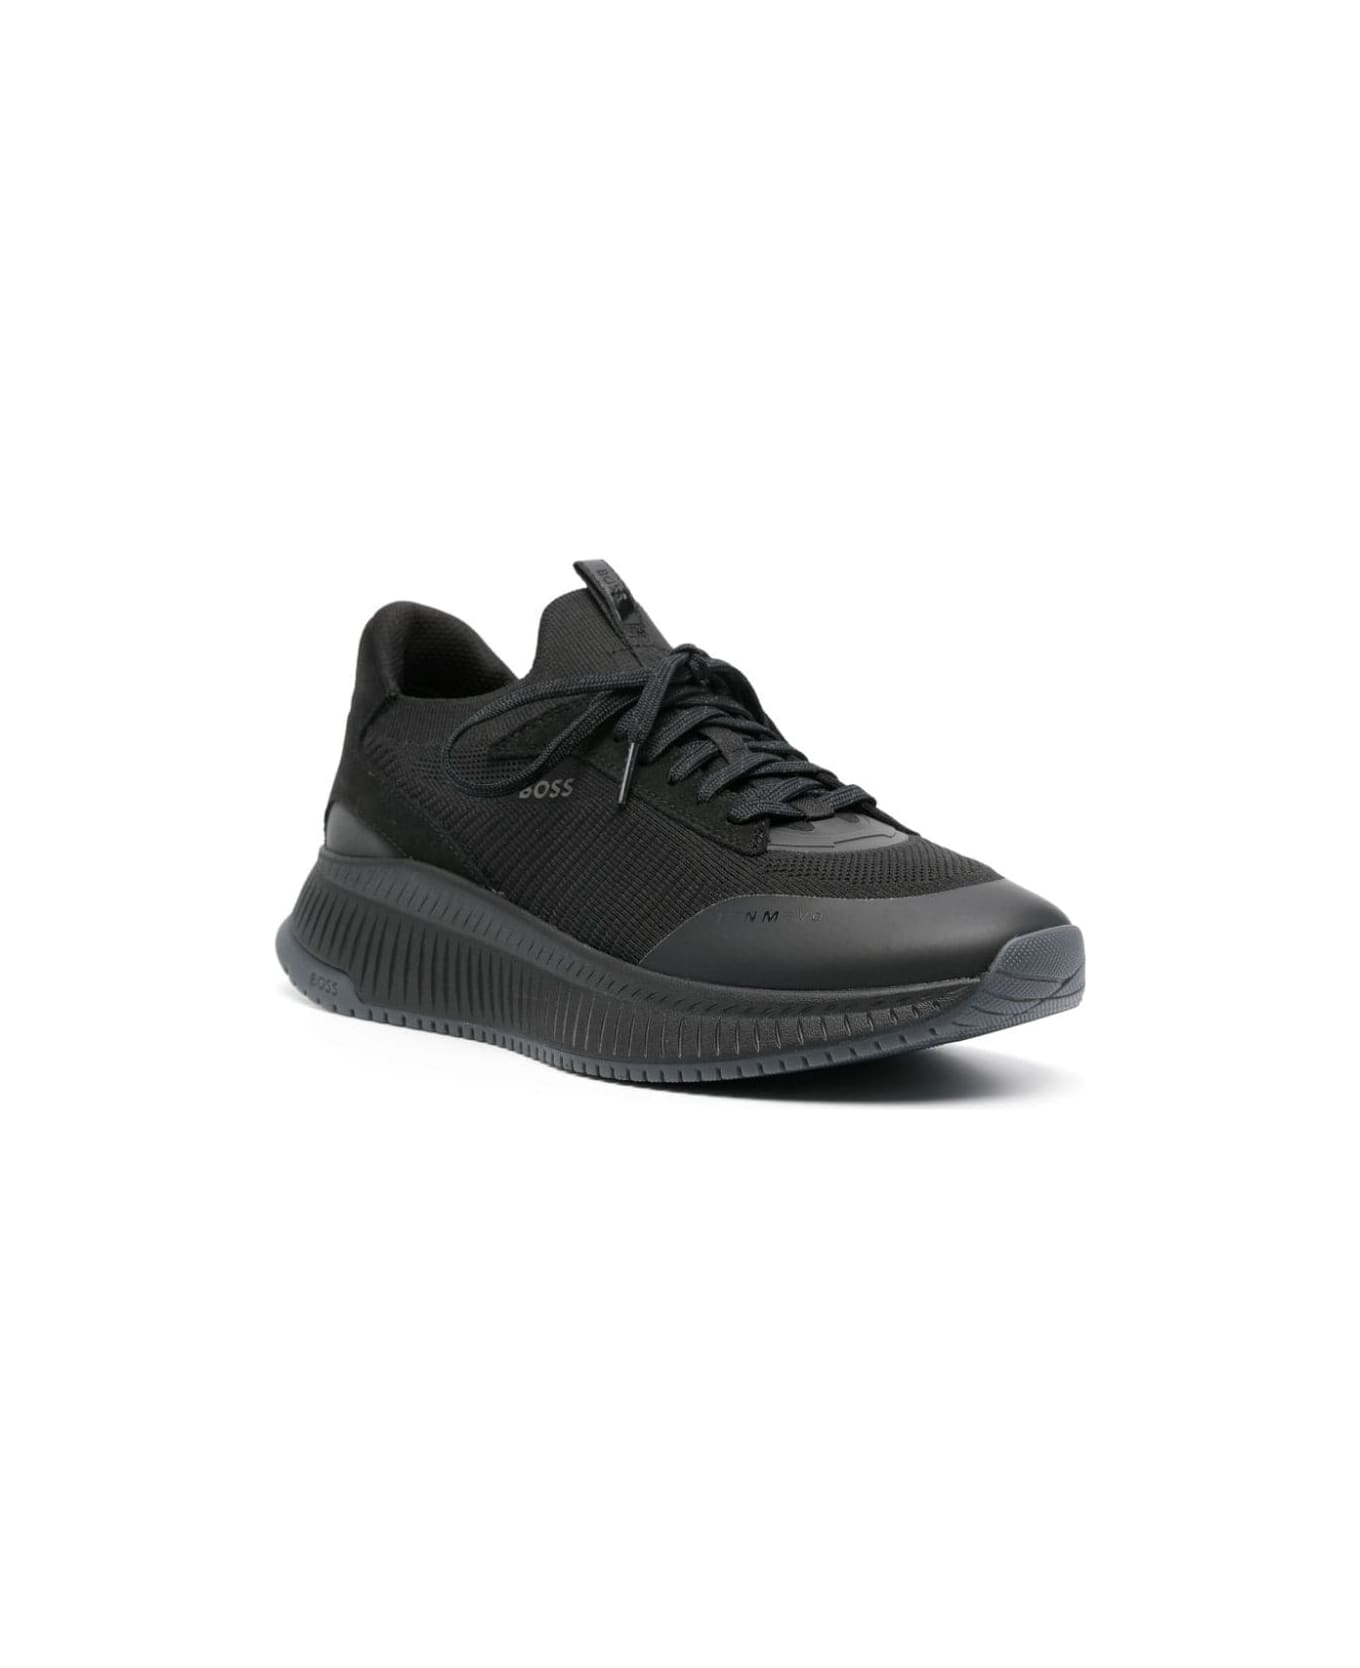 Hugo Boss Black Sock Sneakers With Knitted Upper And Herringbone Sole - Black